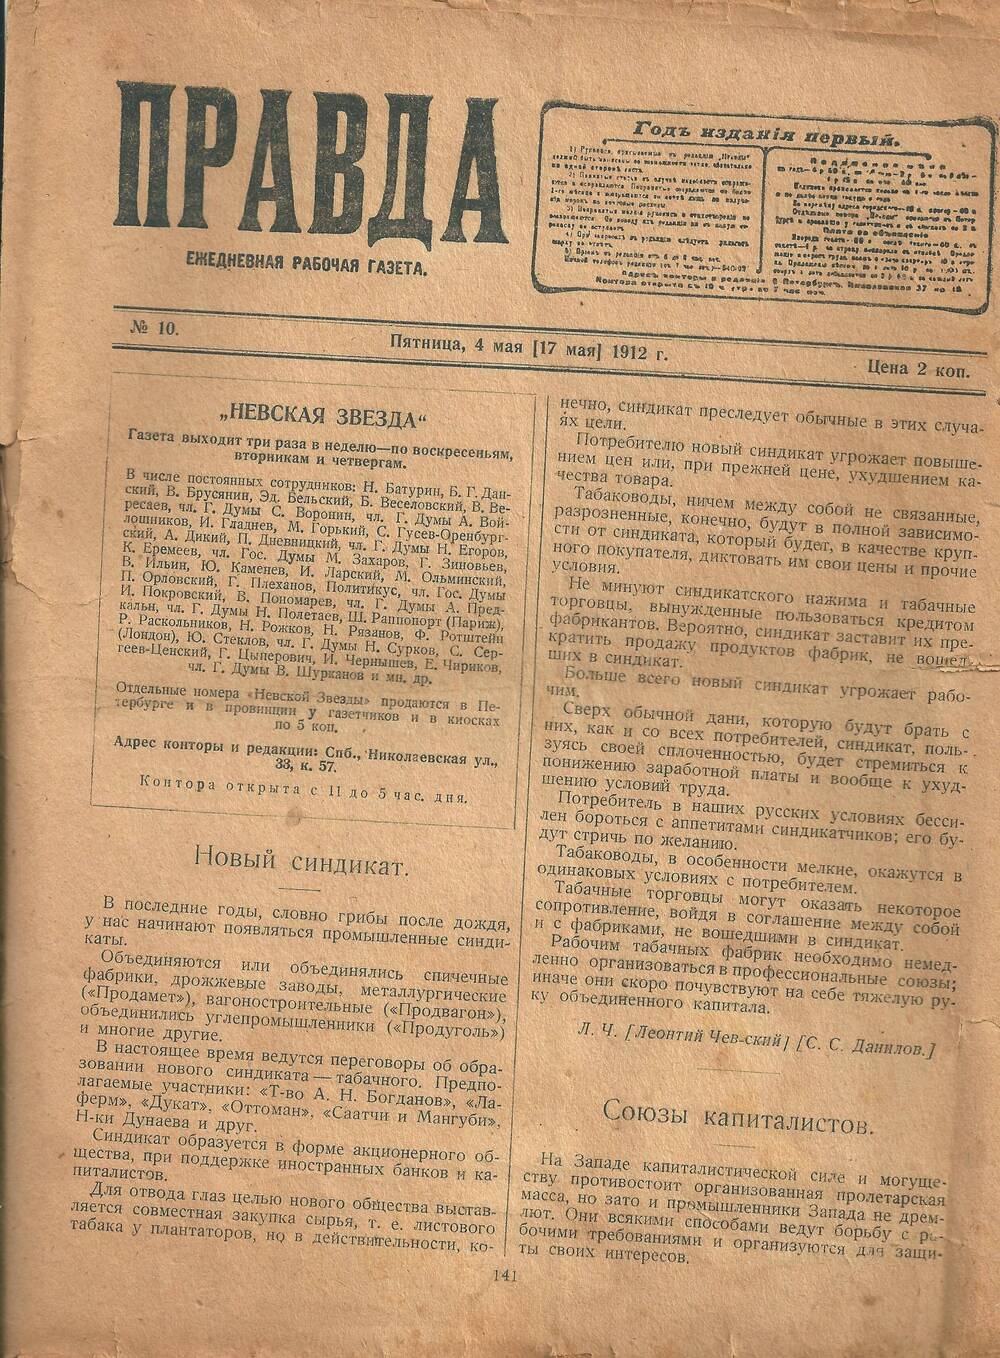 Ежедневная рабочая газета Правда № 10 от 4 мая 1912 г.